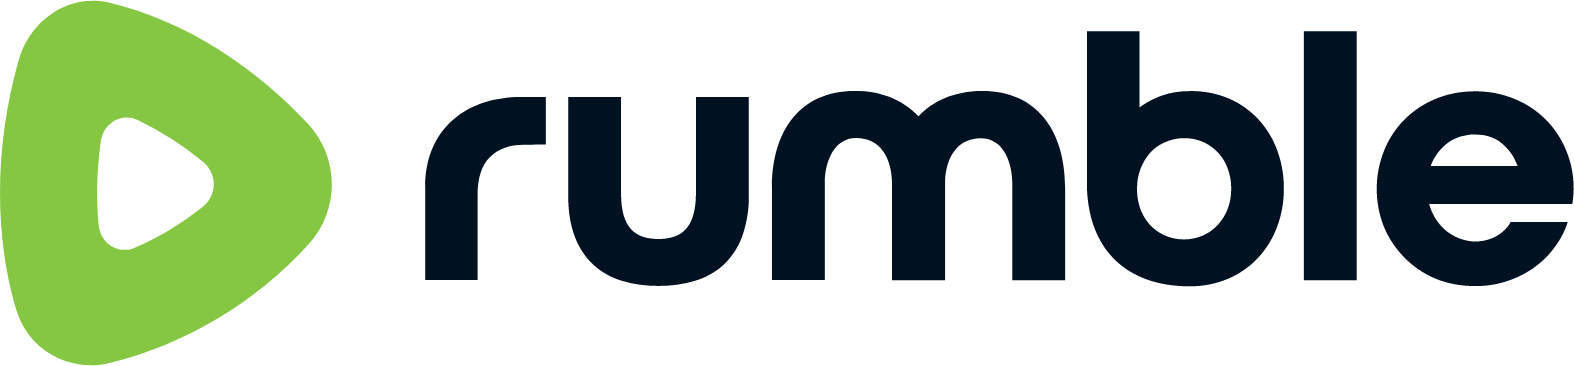 Rumble logo large (transparent PNG)